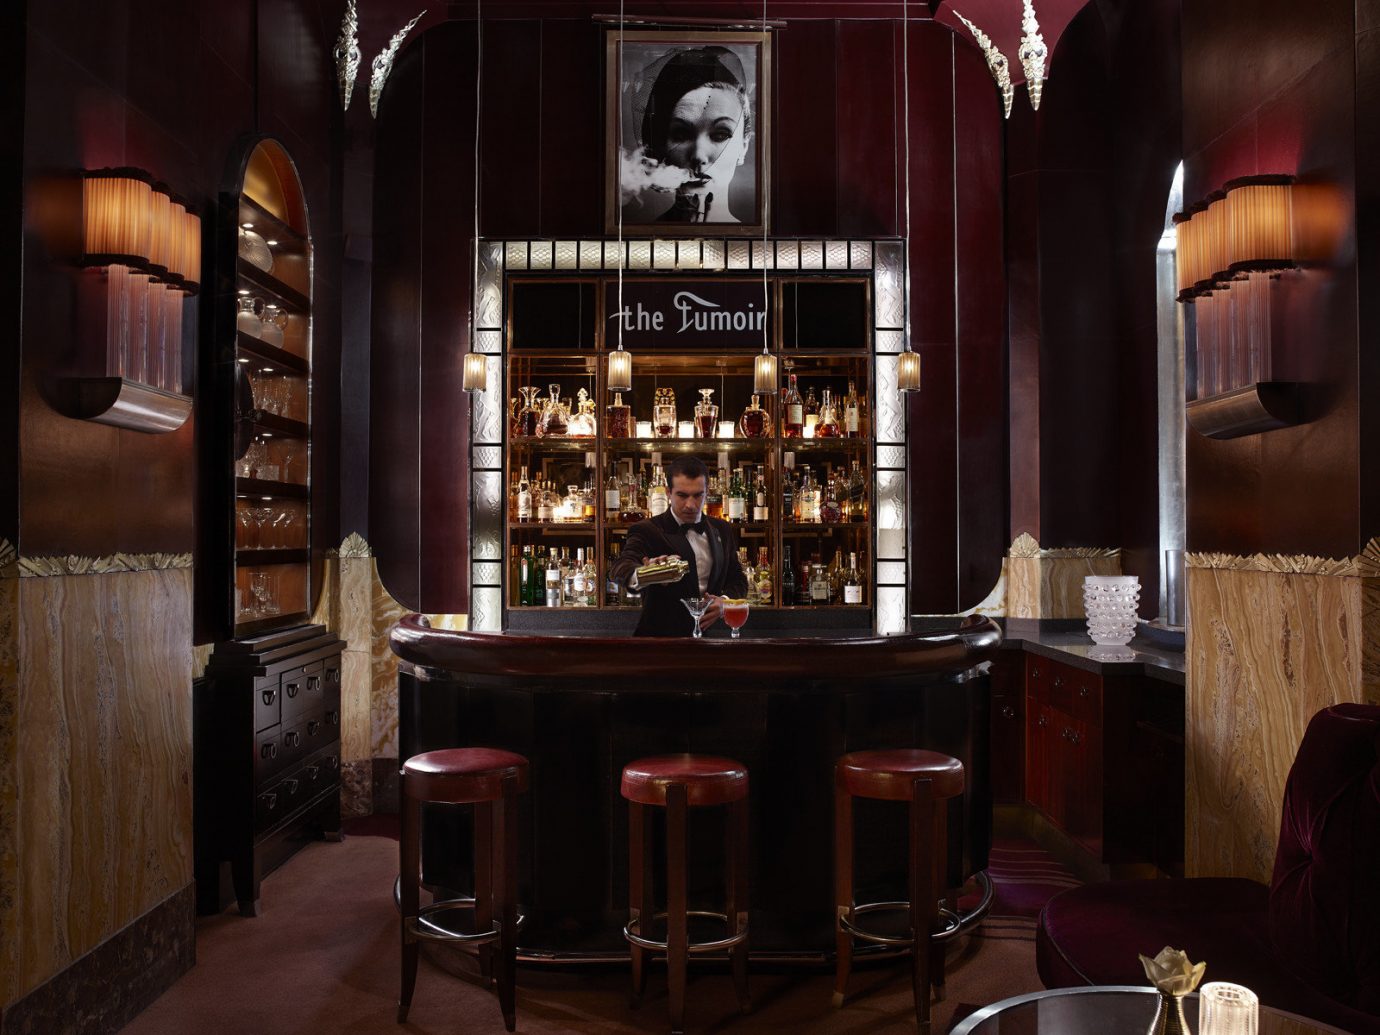 Hotels London Luxury Travel indoor Bar restaurant interior design lighting Winery estate